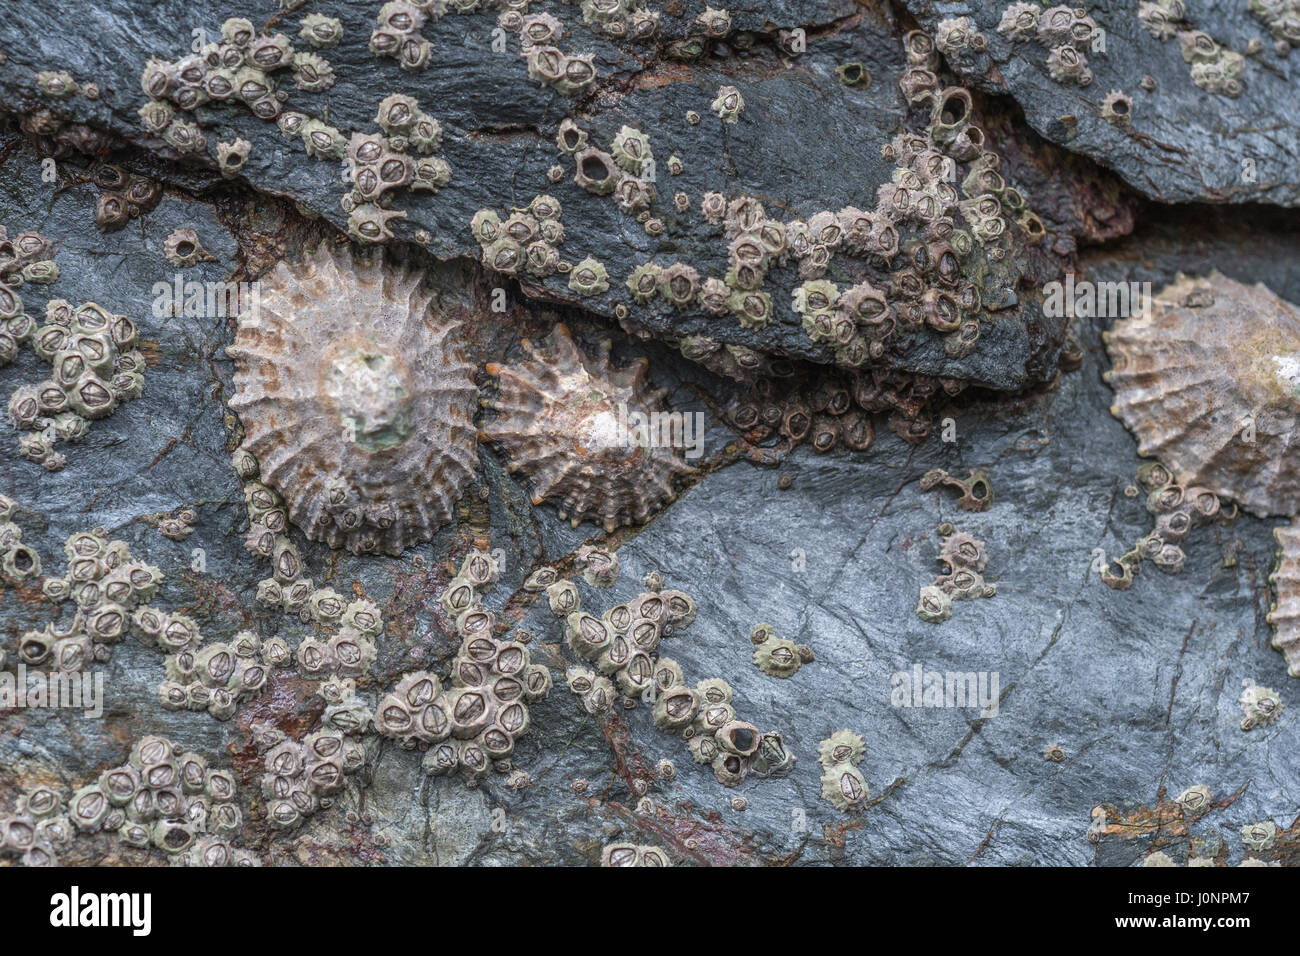 Conical shells of Common Limpets (Patella vulgata) - a foragable shellfish found around the UK coastline. Stock Photo